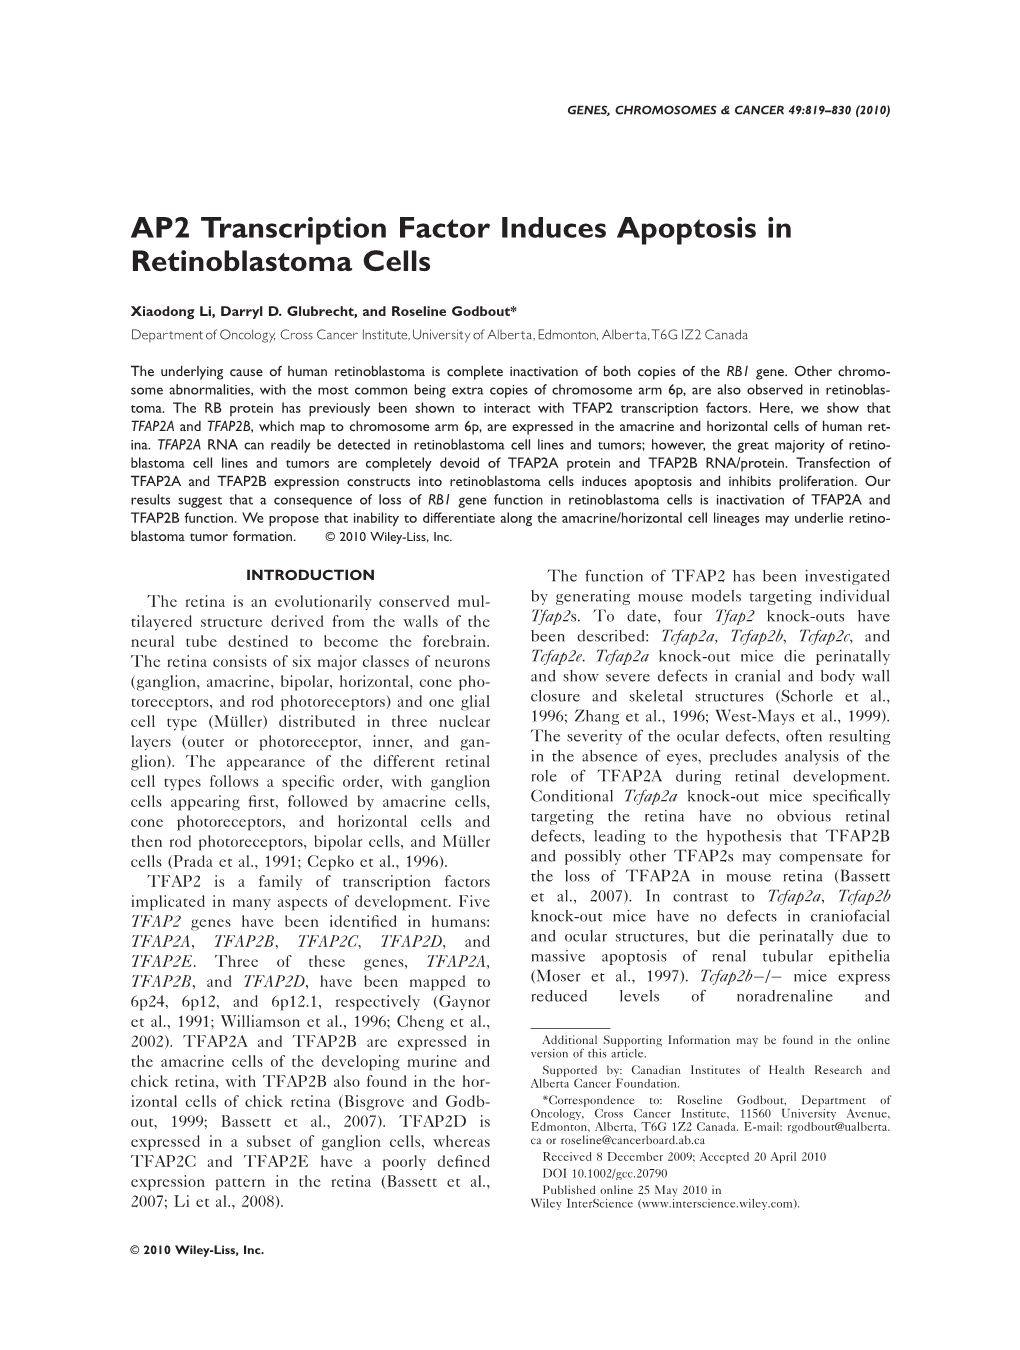 AP2 Transcription Factor Induces Apoptosis in Retinoblastoma Cells